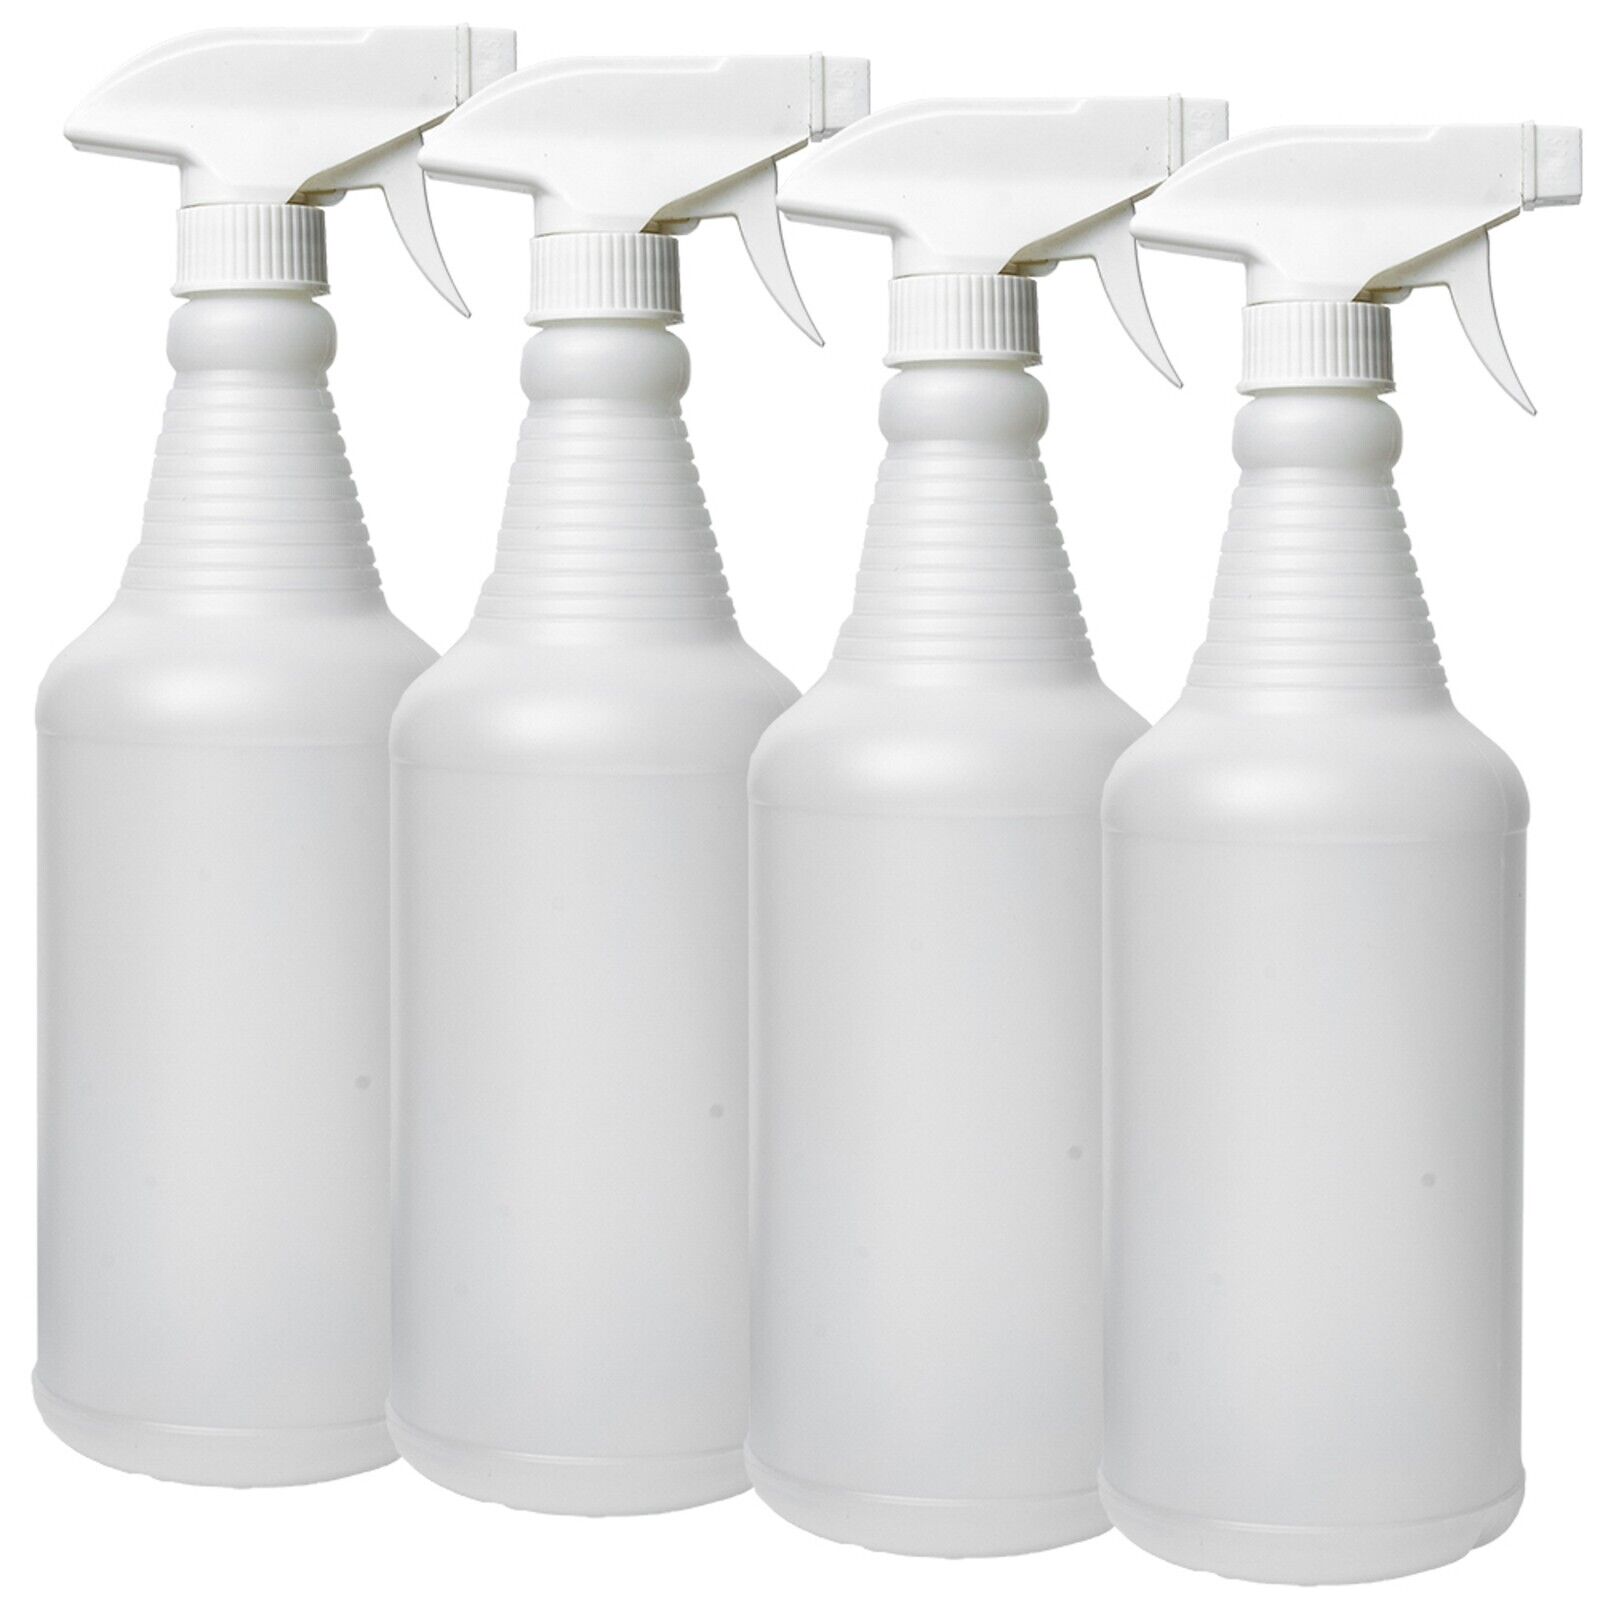 32oz. Plastic Trigger Spray Bottles Chemical Resistant Heavy Duty Commercial 4pk